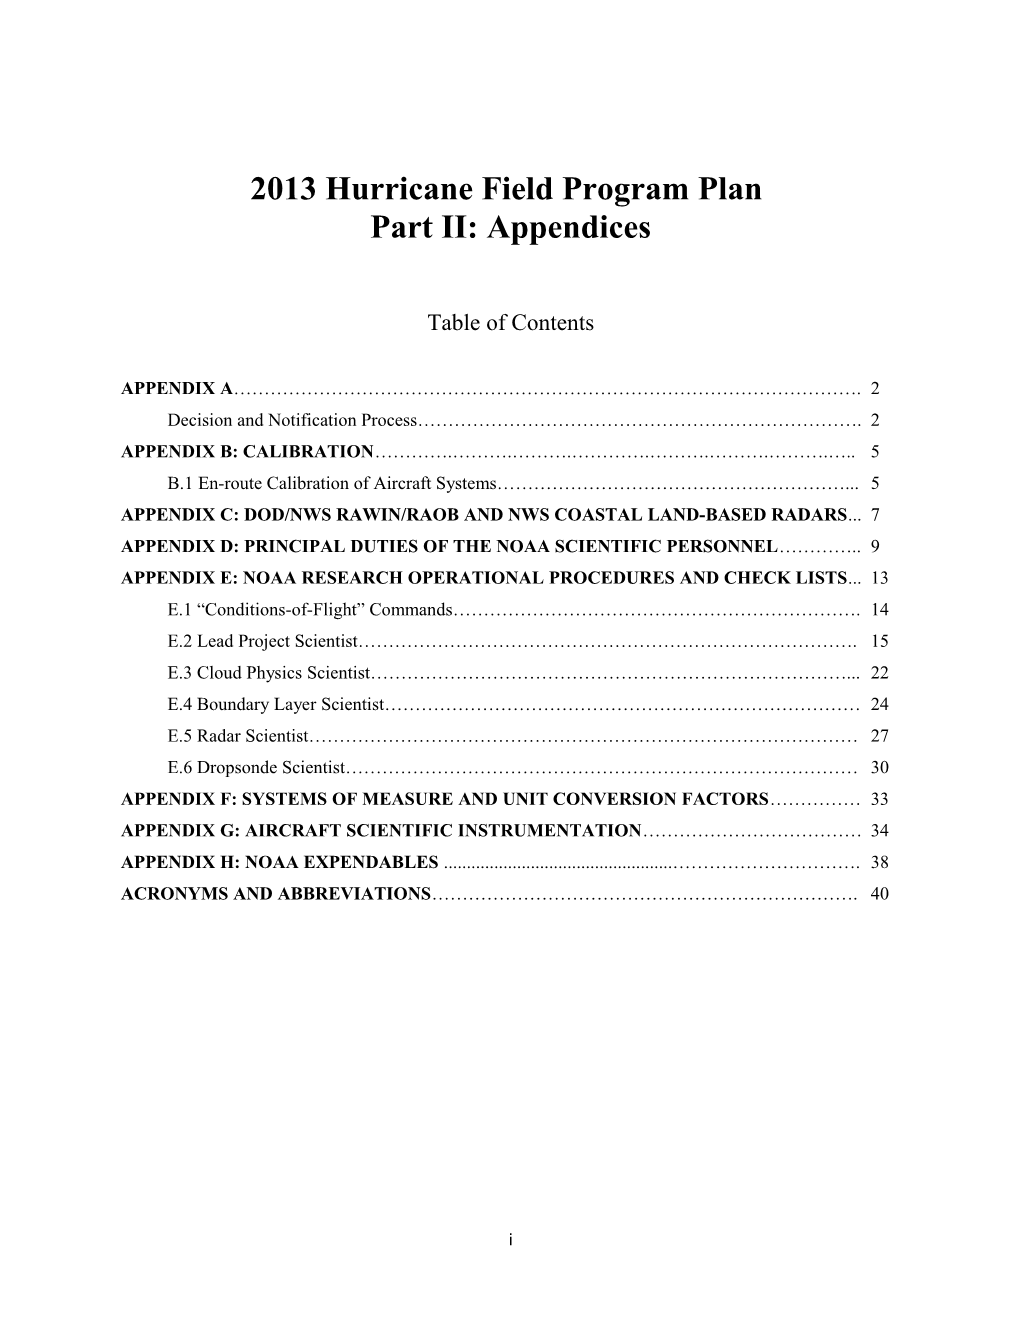 2013Hurricane Field Program Plan